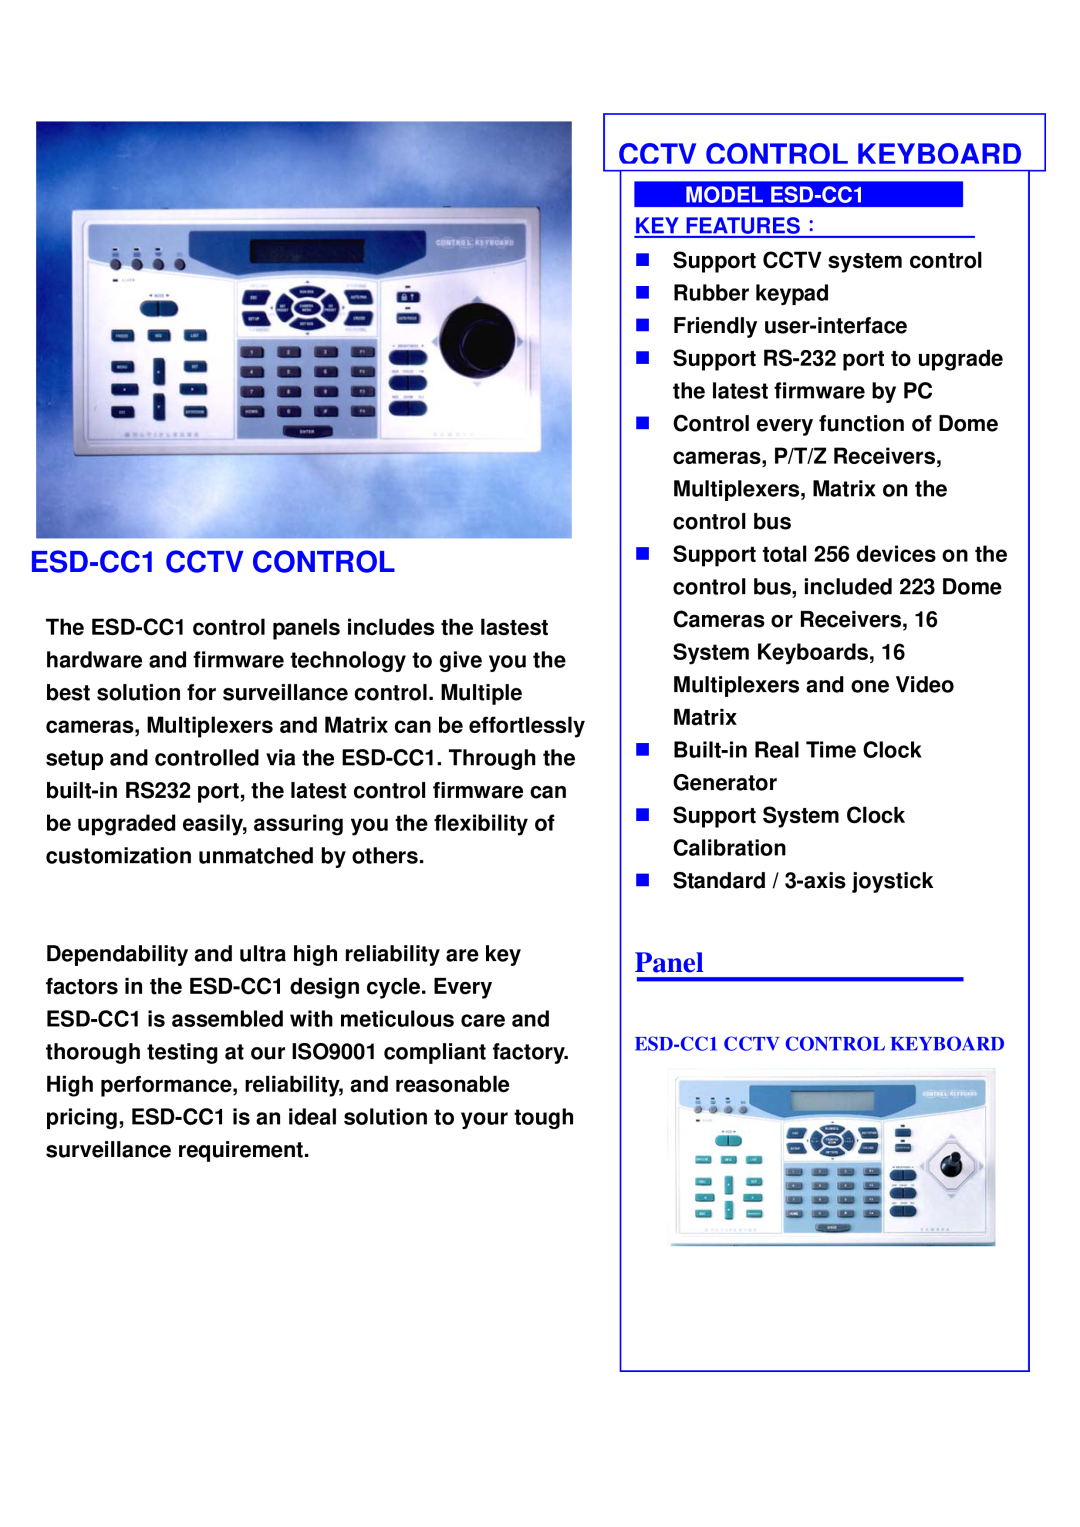 Elmo manual Key Features：, ESD-CC1CCTV CONTROL, Cctv Control Keyboard, Panel, MODEL ESD-CC1 